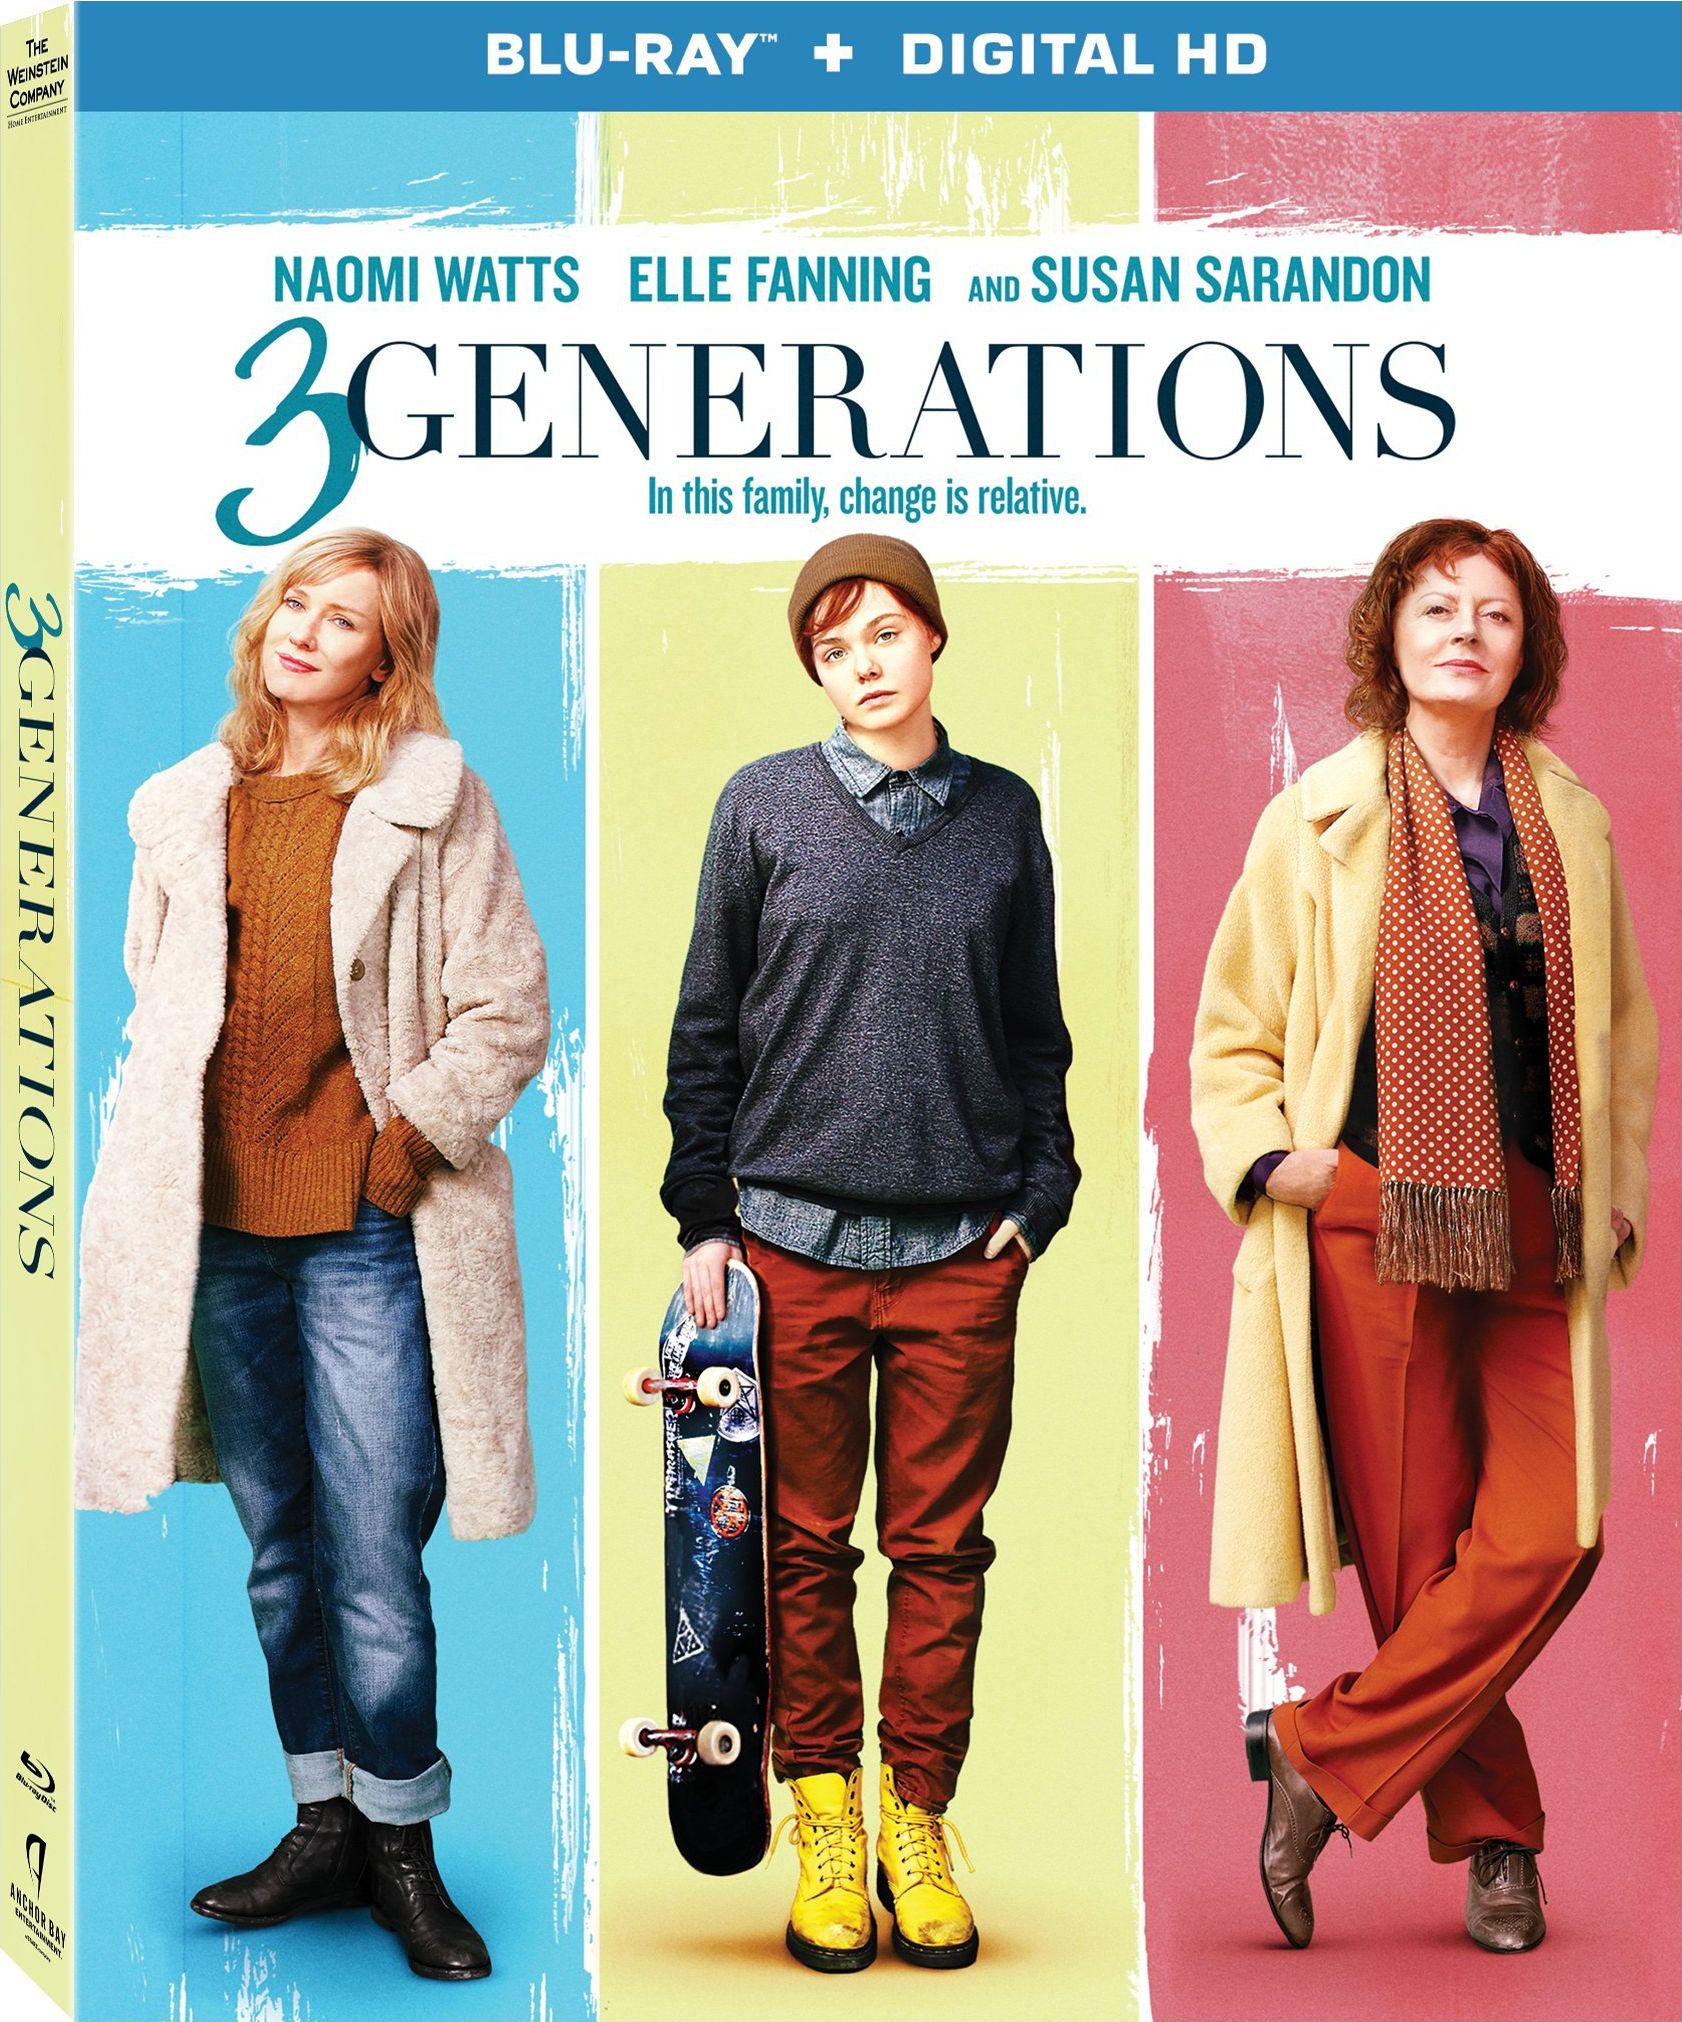 3 Generations DVD Release Date June 13, 2017